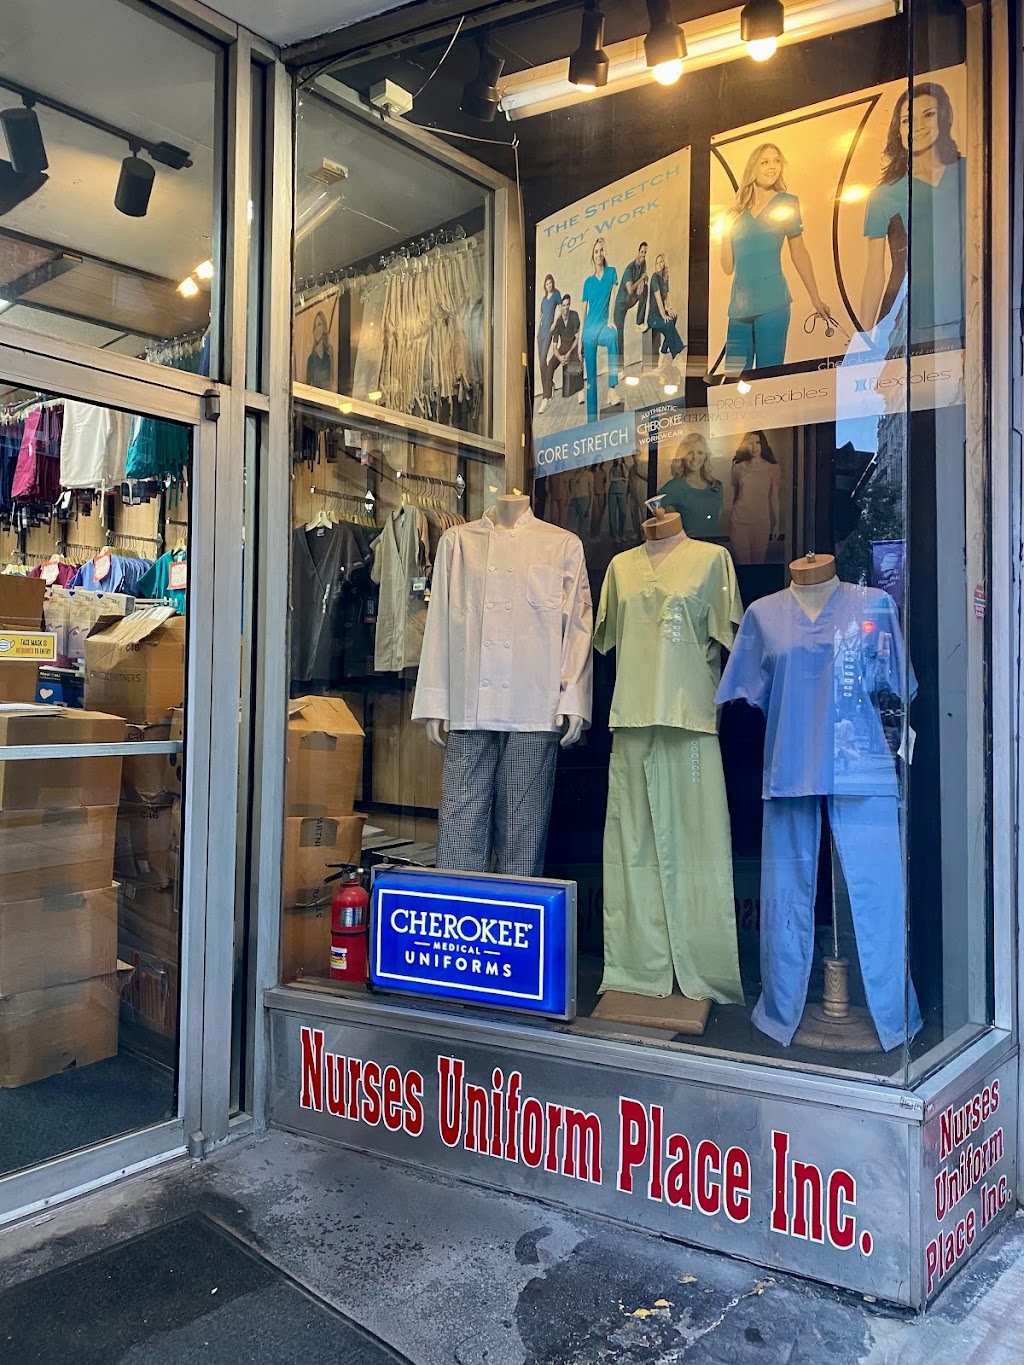 Nurses Uniform Place Inc | 1104 Chestnut St, Philadelphia, PA 19107 | Phone: (215) 922-1112